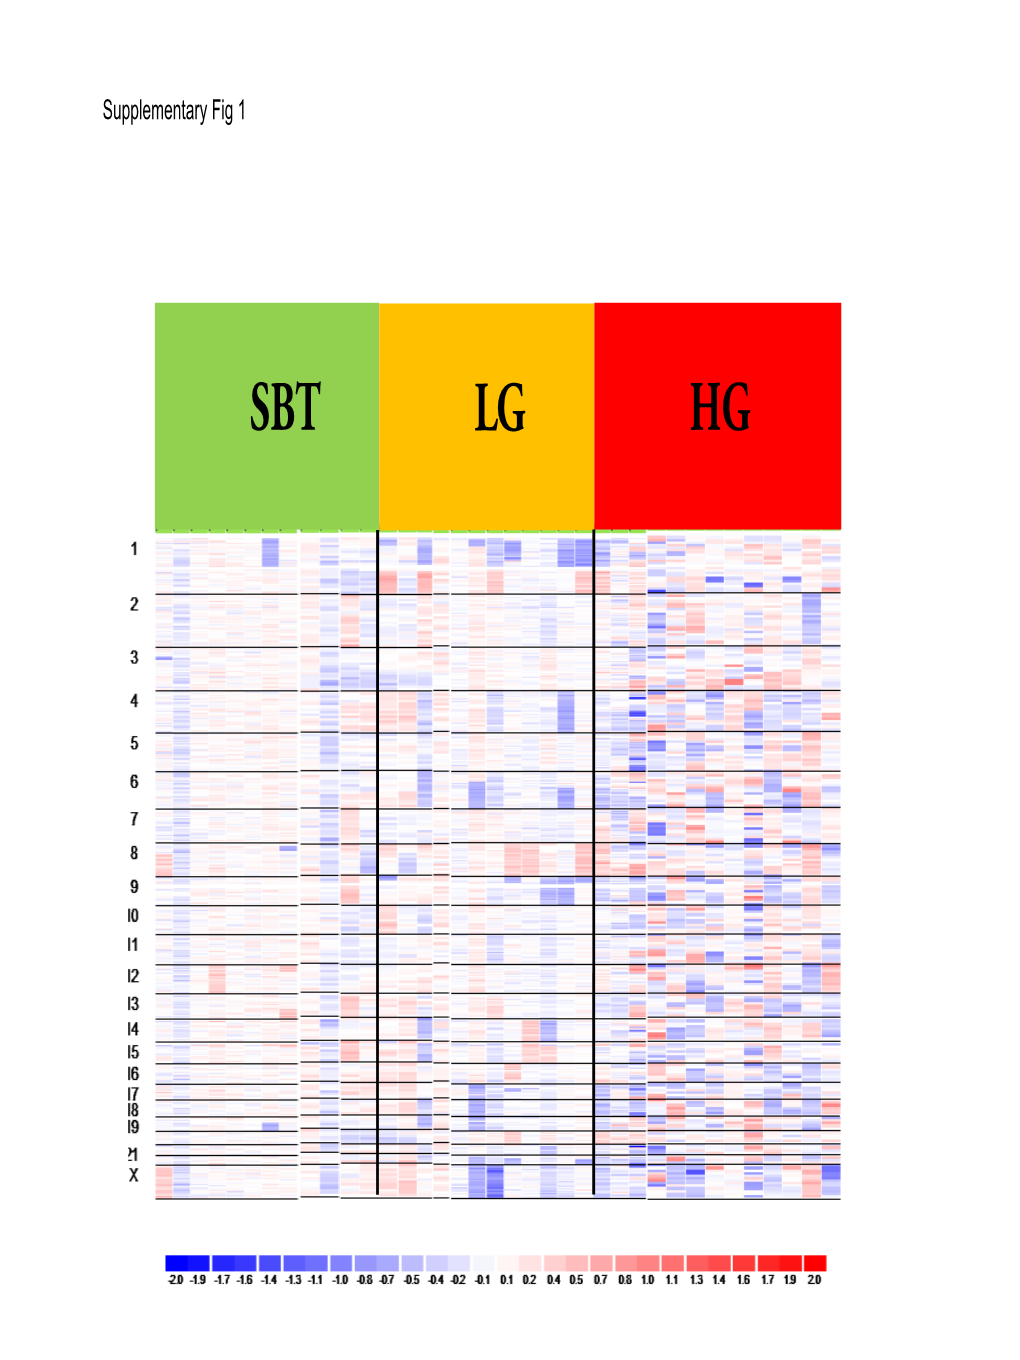 SBT LG HG Supplementary Figure 1